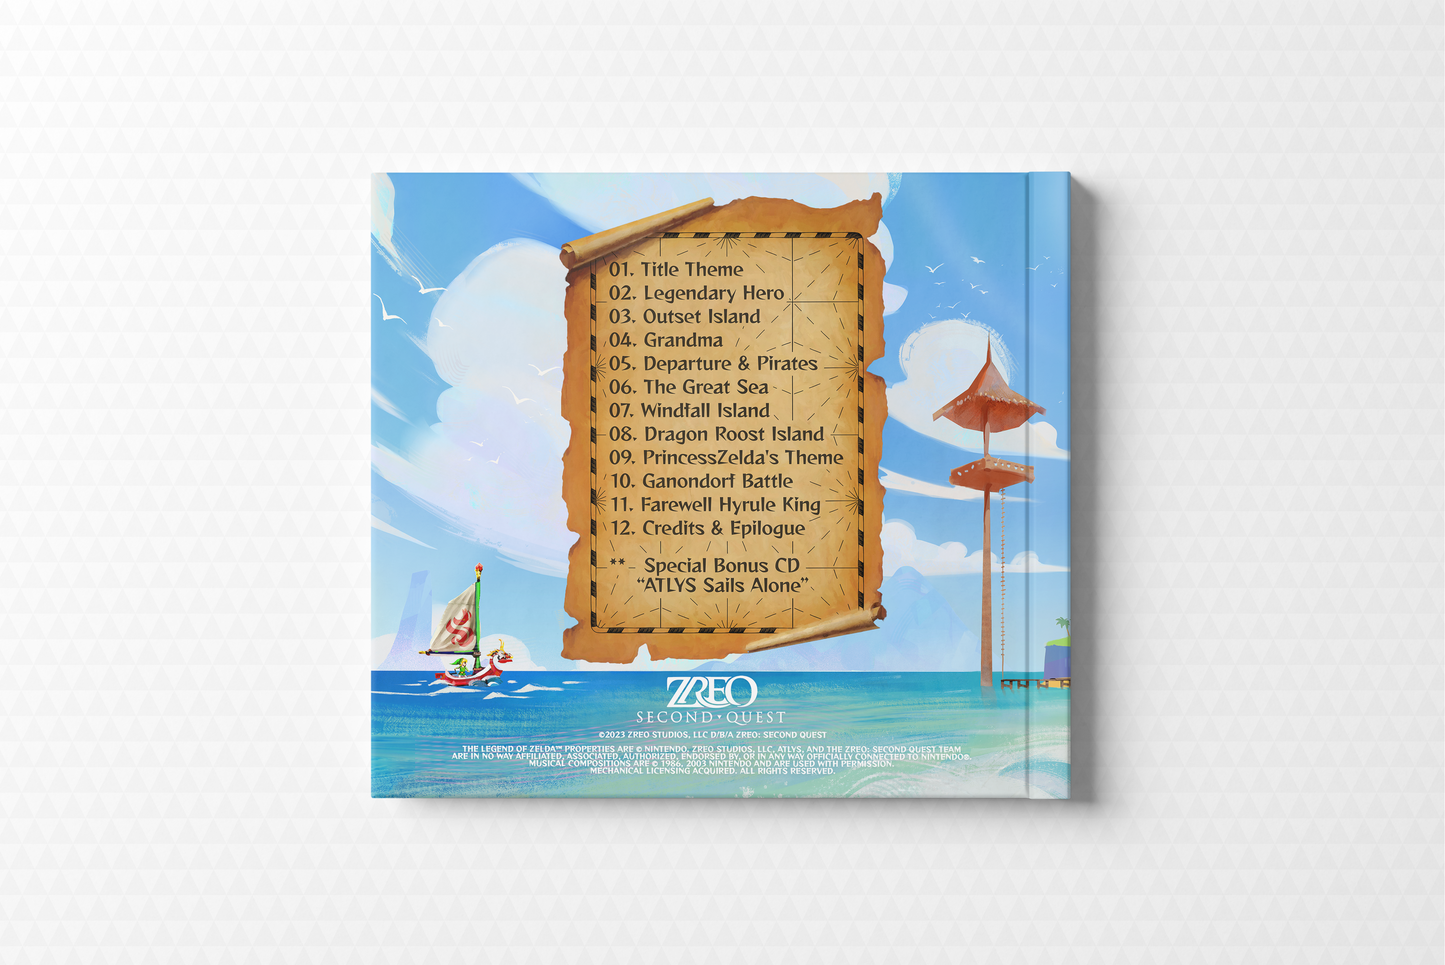 Fair Winds & Following Seas Deluxe CD Preorder